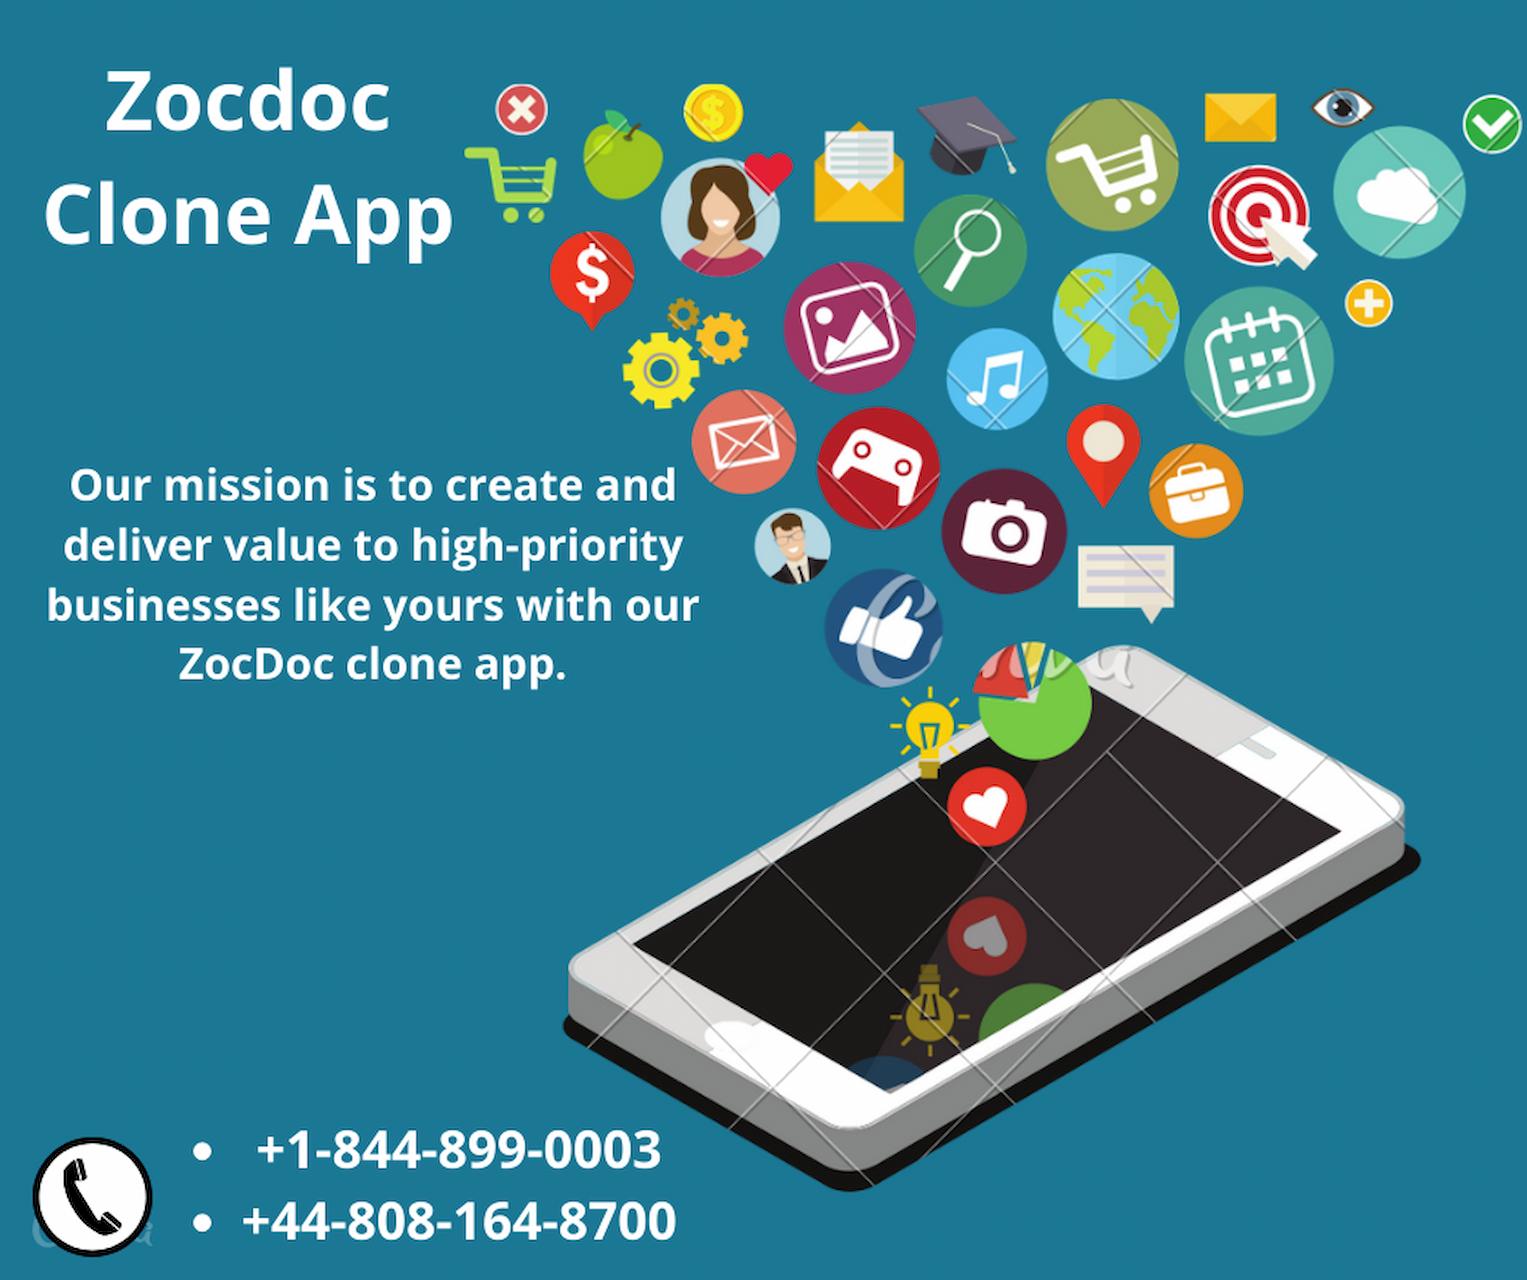 public/uploads/2021/12/Zocdoc-Clone-App.jpg